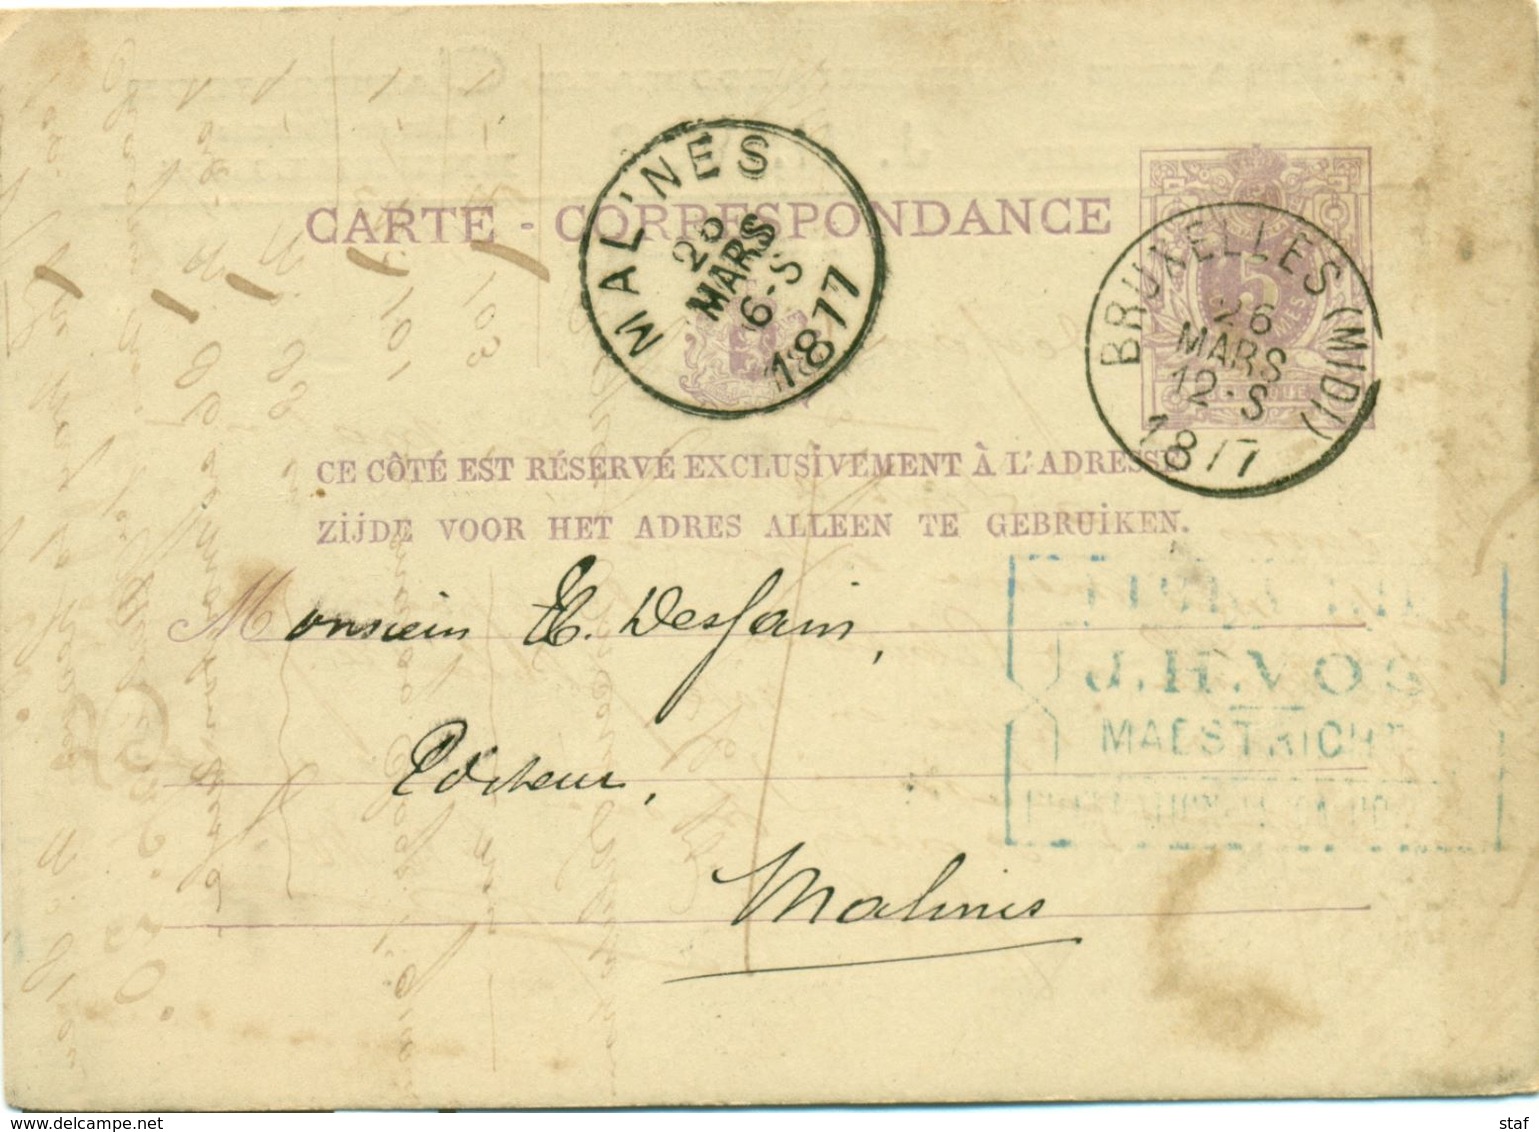 Briefkaart - Carte Correspondance Nr 9 - Afz. Librairie Internationale Catholique J. H. Vos Te Maestricht : 1877 - Printing & Stationeries